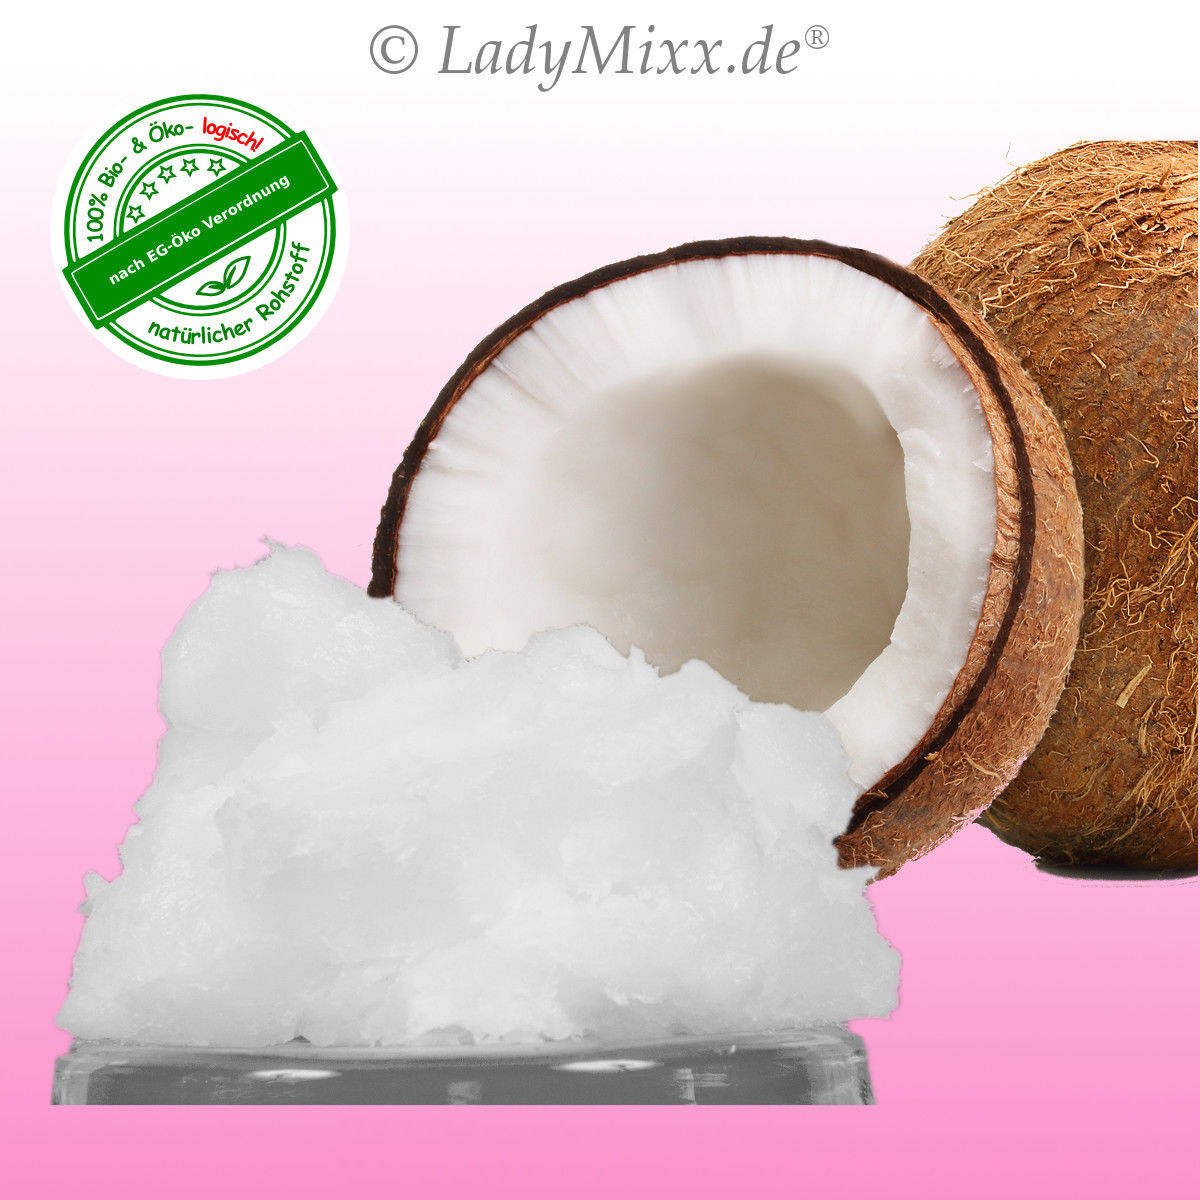 BIO Kokosöl nativ 500 1000ml Kokosfett Kokosnussöl Coconut kaltgepresst LadyMixx